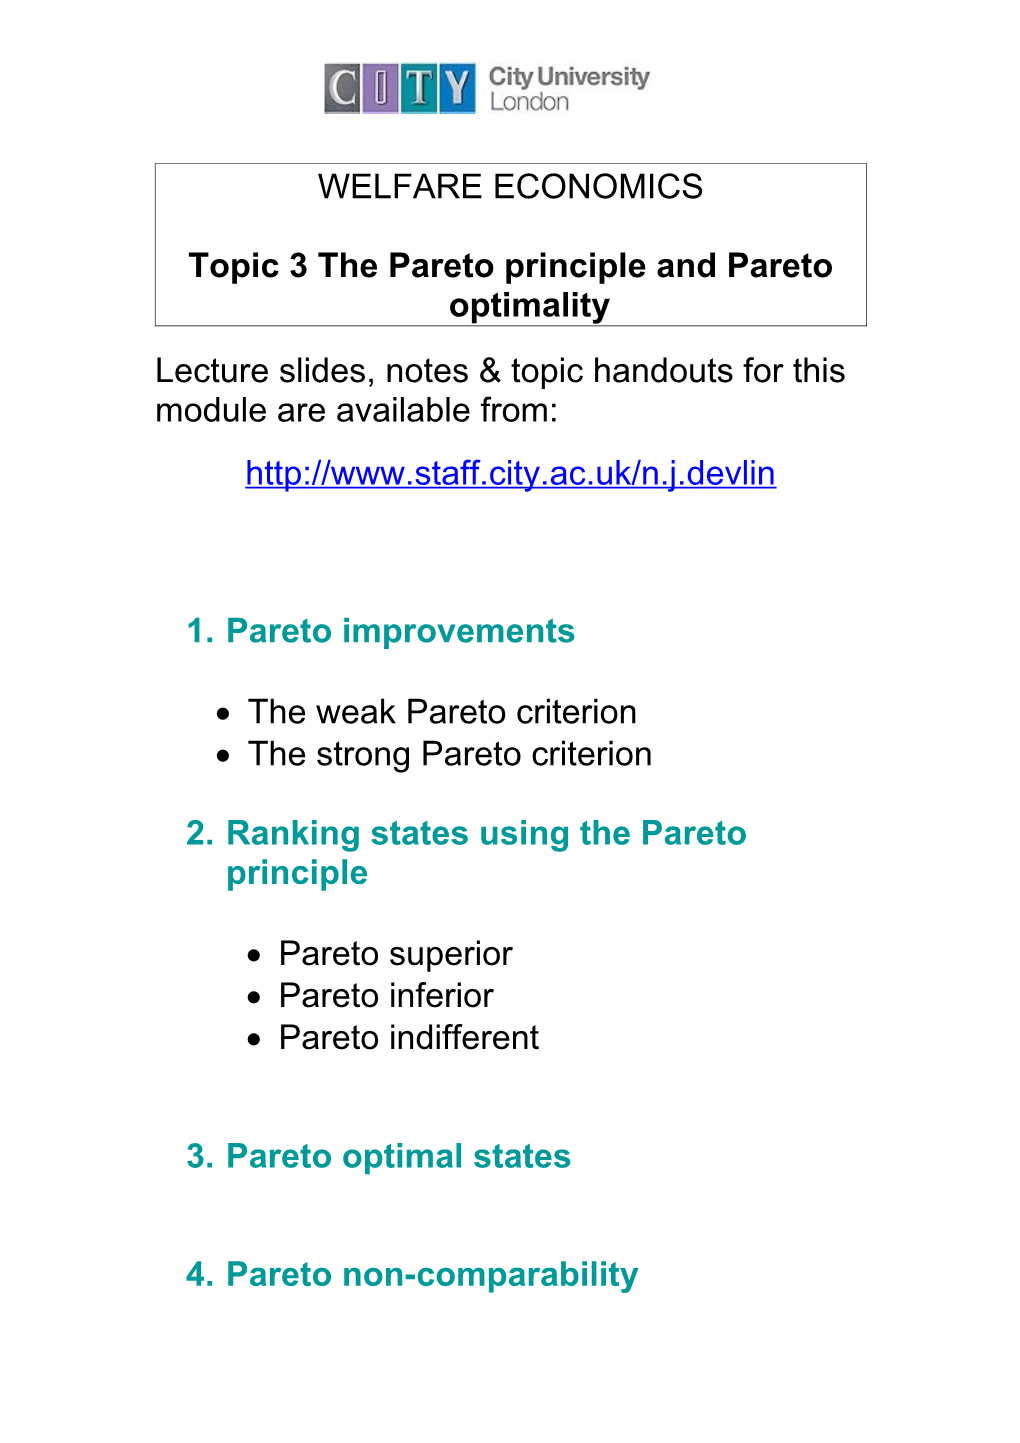 Topic 3 the Pareto Principle and Pareto Optimality